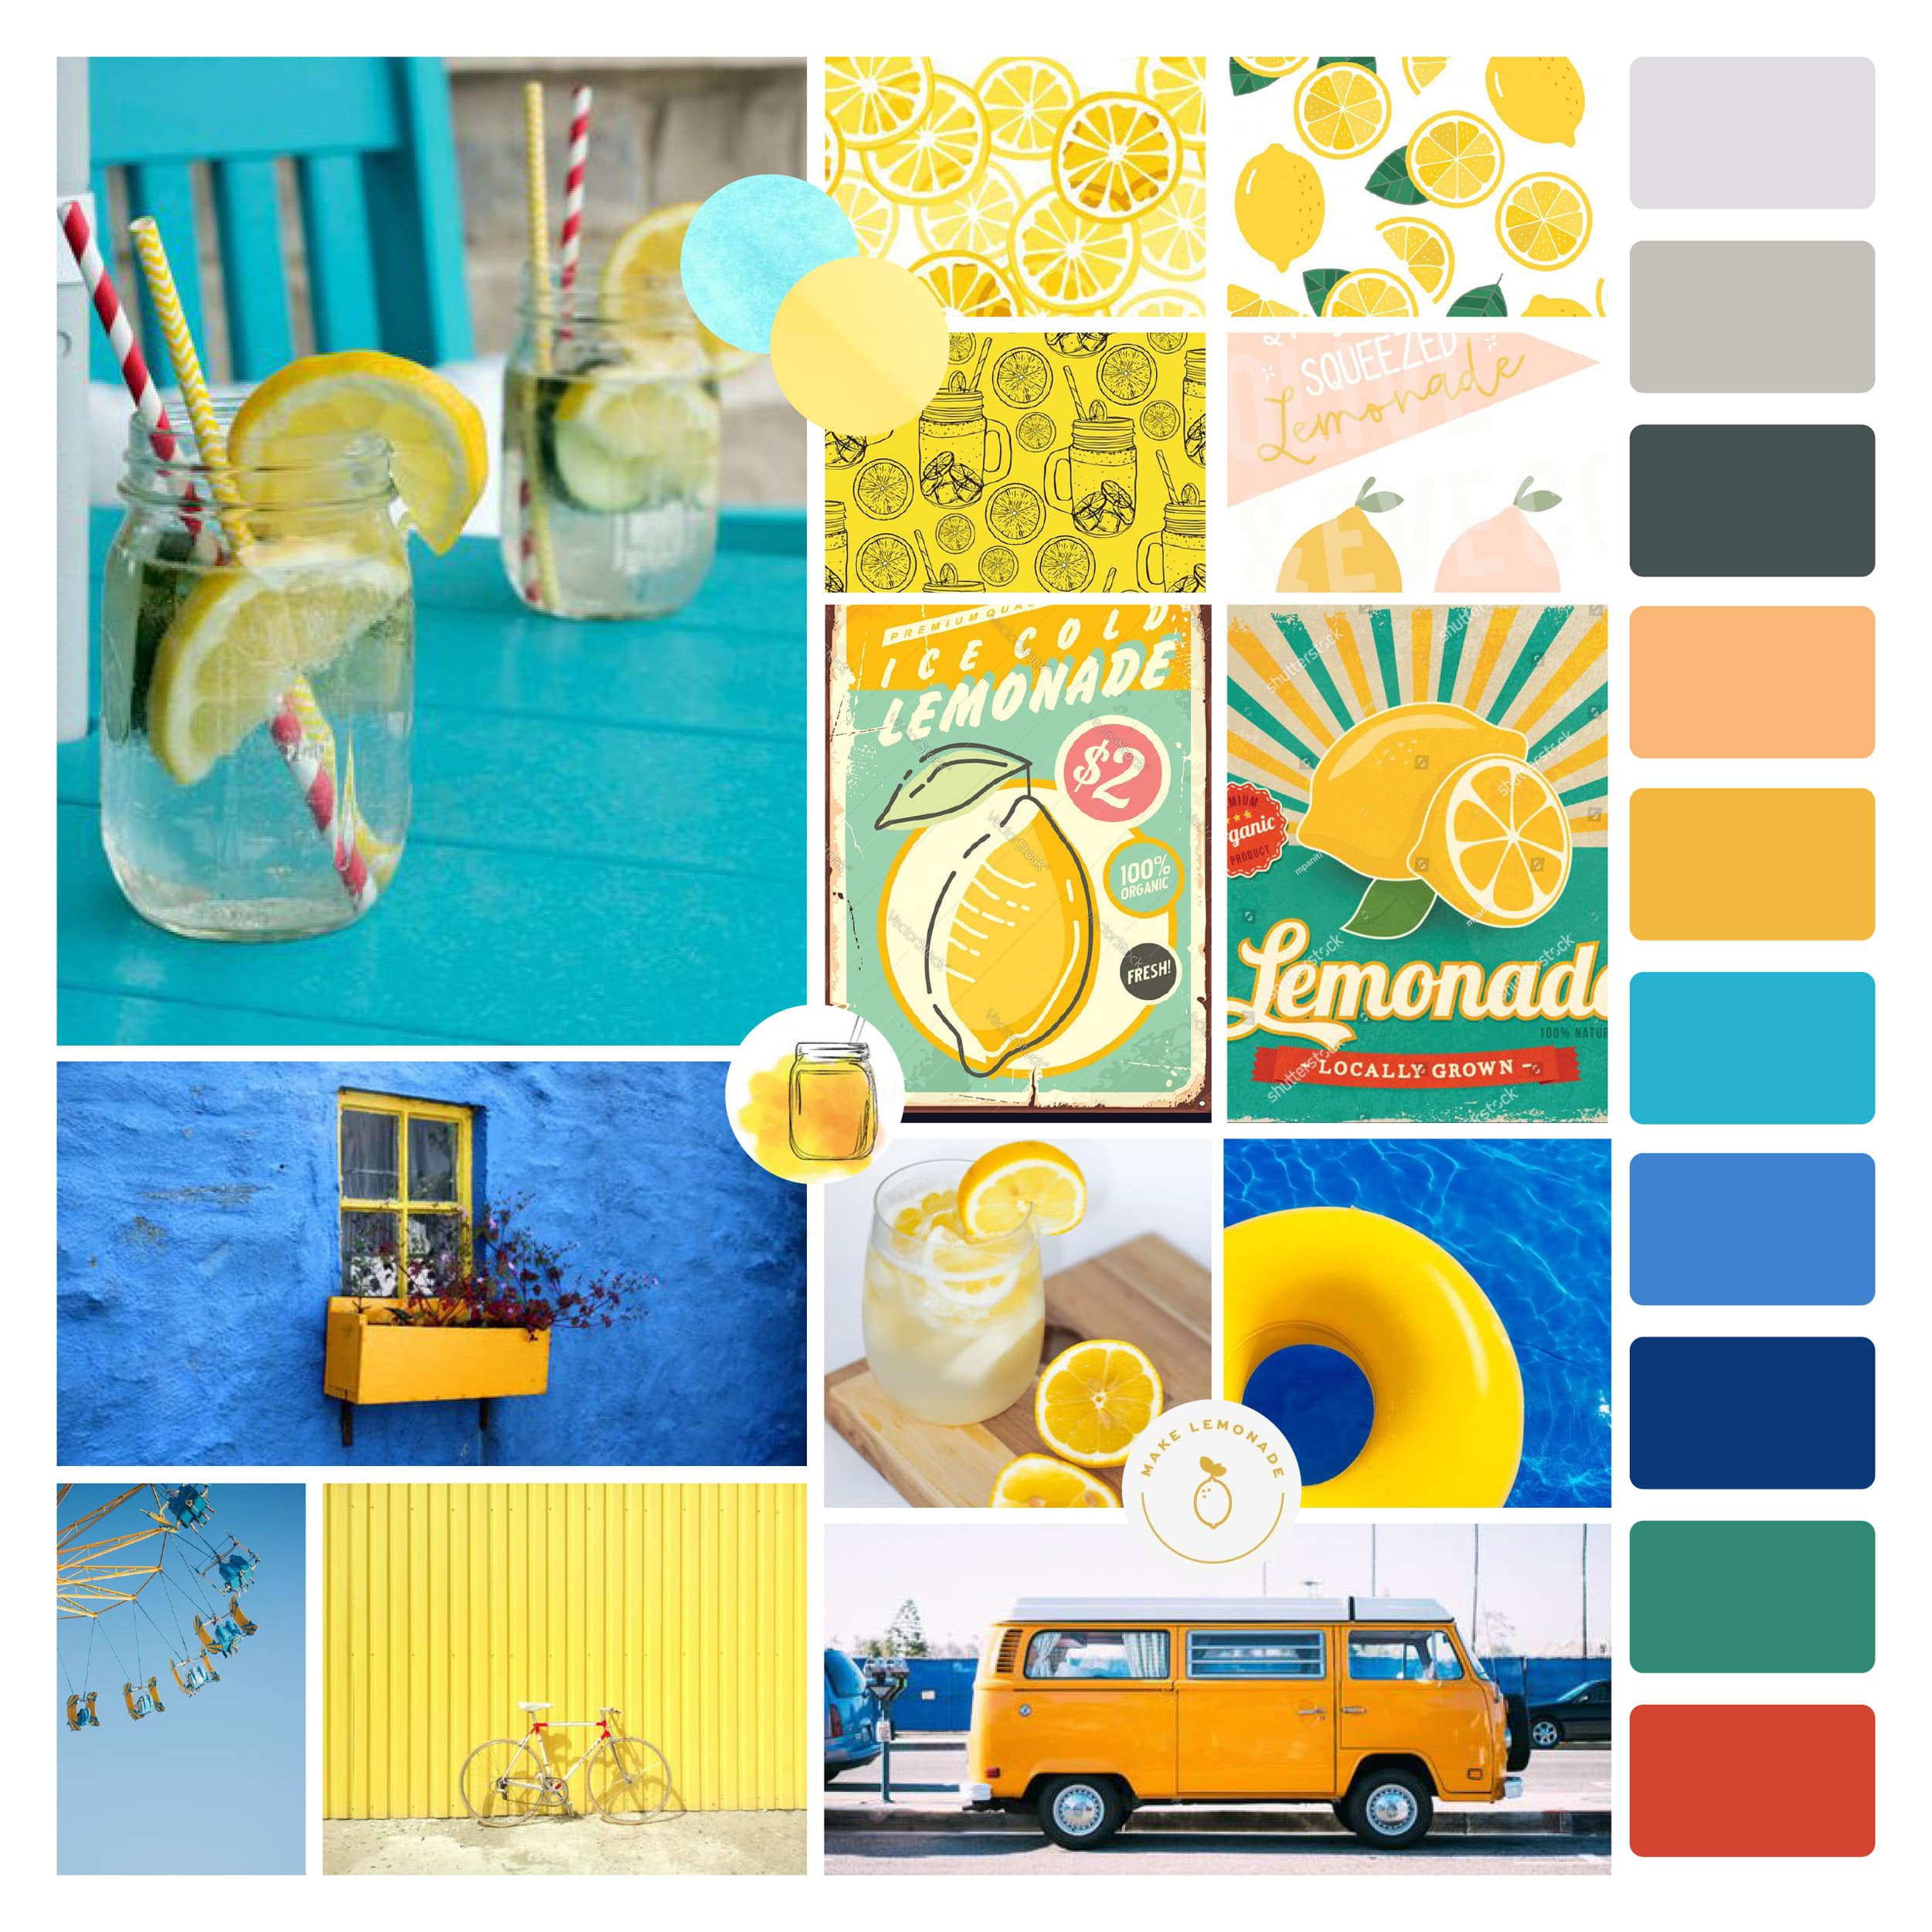 handi made lemonade moodboard with lemonade glasses, a yellow van, bikes, and yellow windows